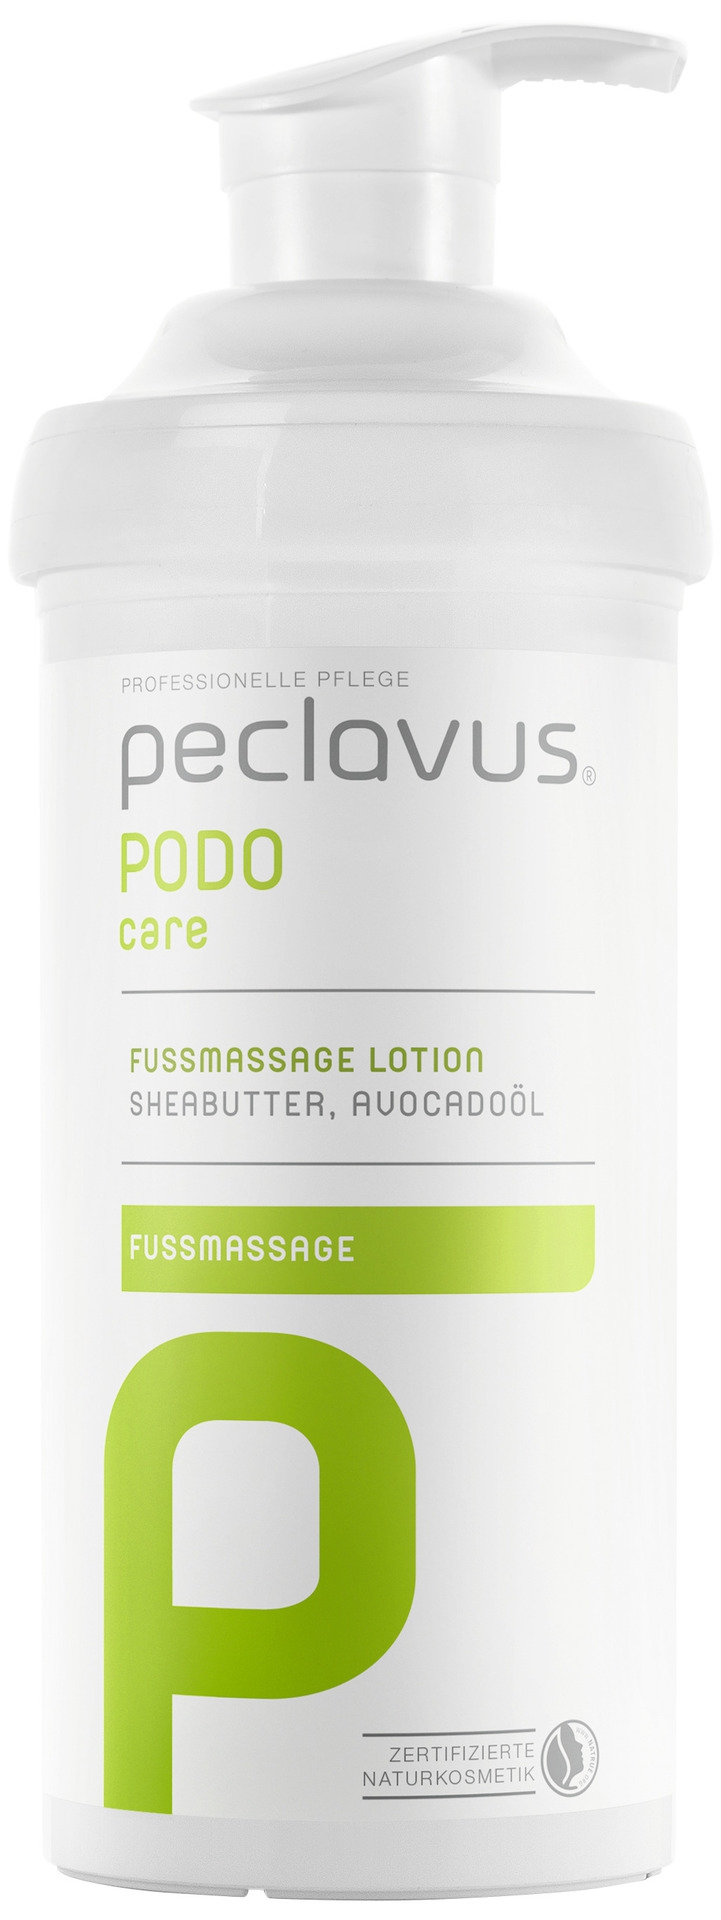 Peclavus PODOcare Fußmassage Lotion | 500 ml